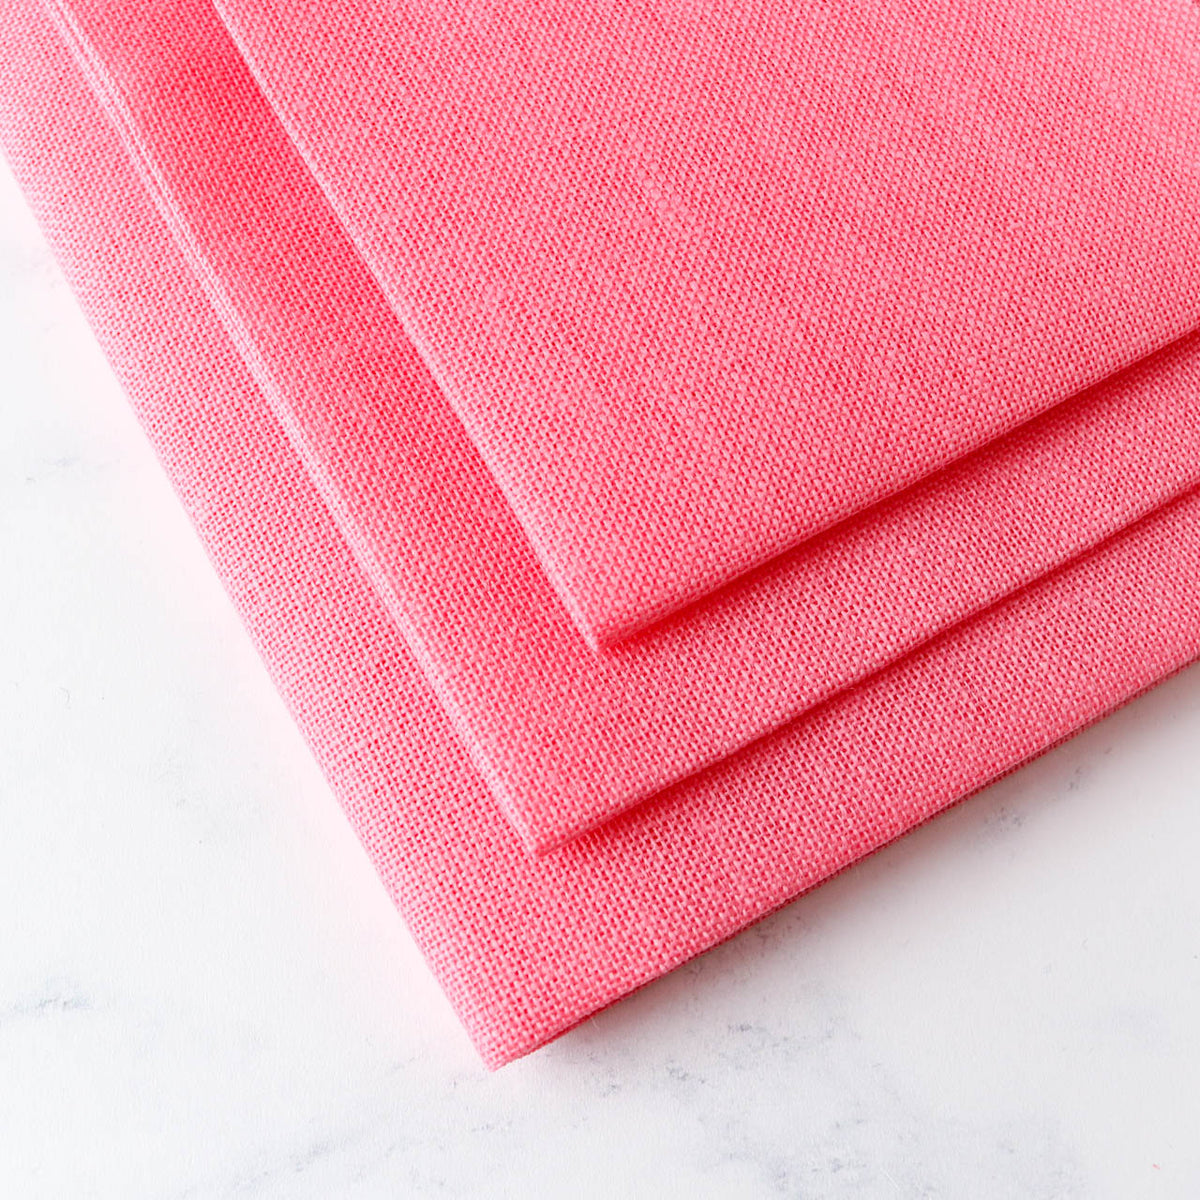 Tropical Pink Linen Cross Stitch Fabric